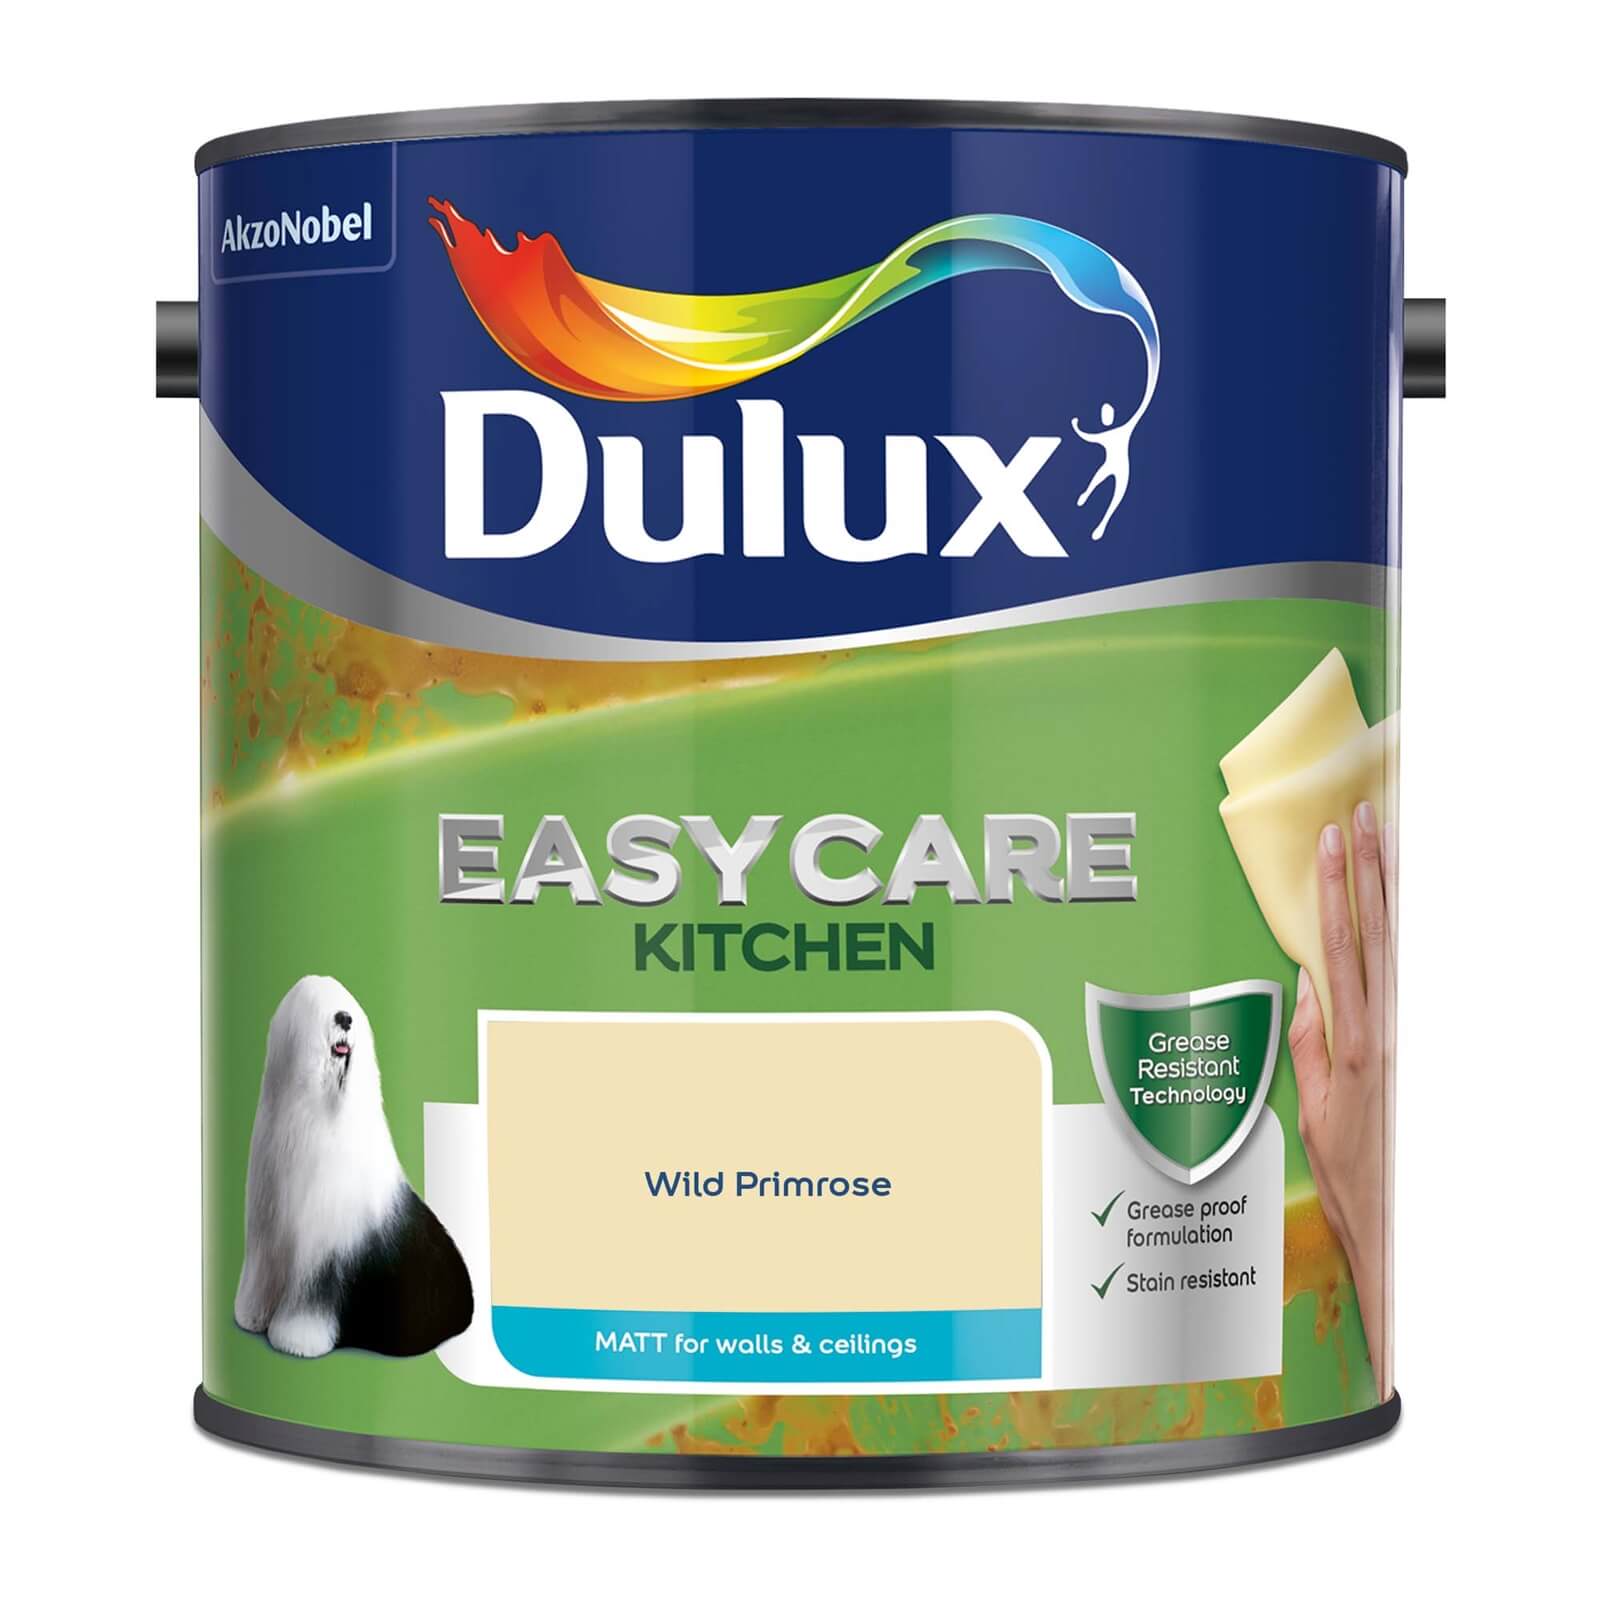 Dulux Easycare Kitchen Wild Primrose Matt Paint - 2.5L